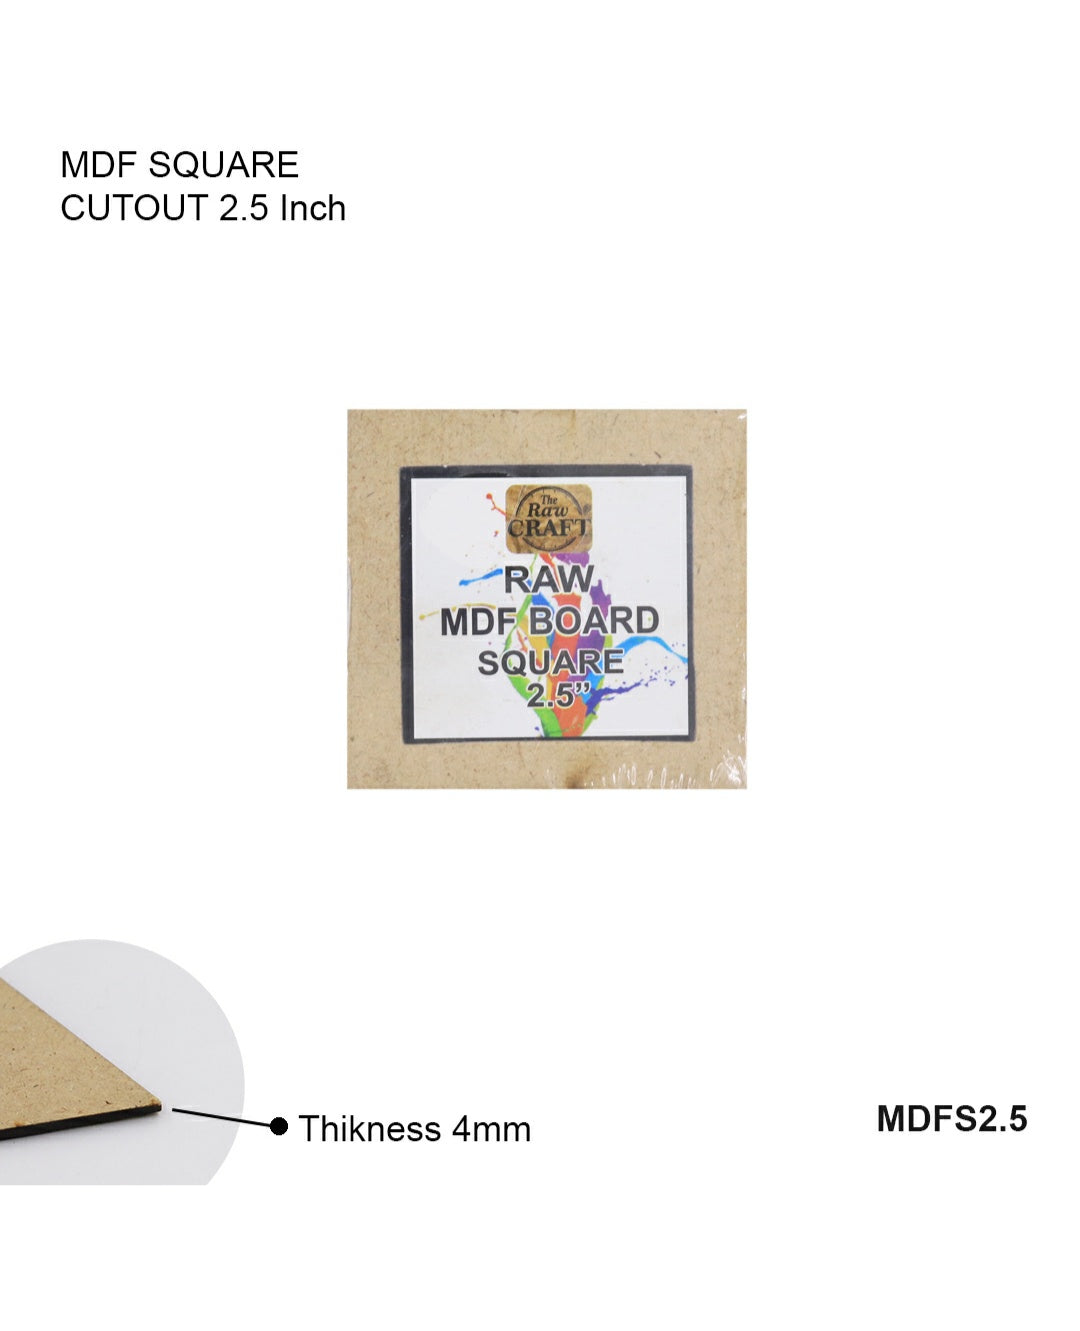 Mdf Cutout Square 2.5X2.5Inch Mdfs2.5X2.5 | INKARTO